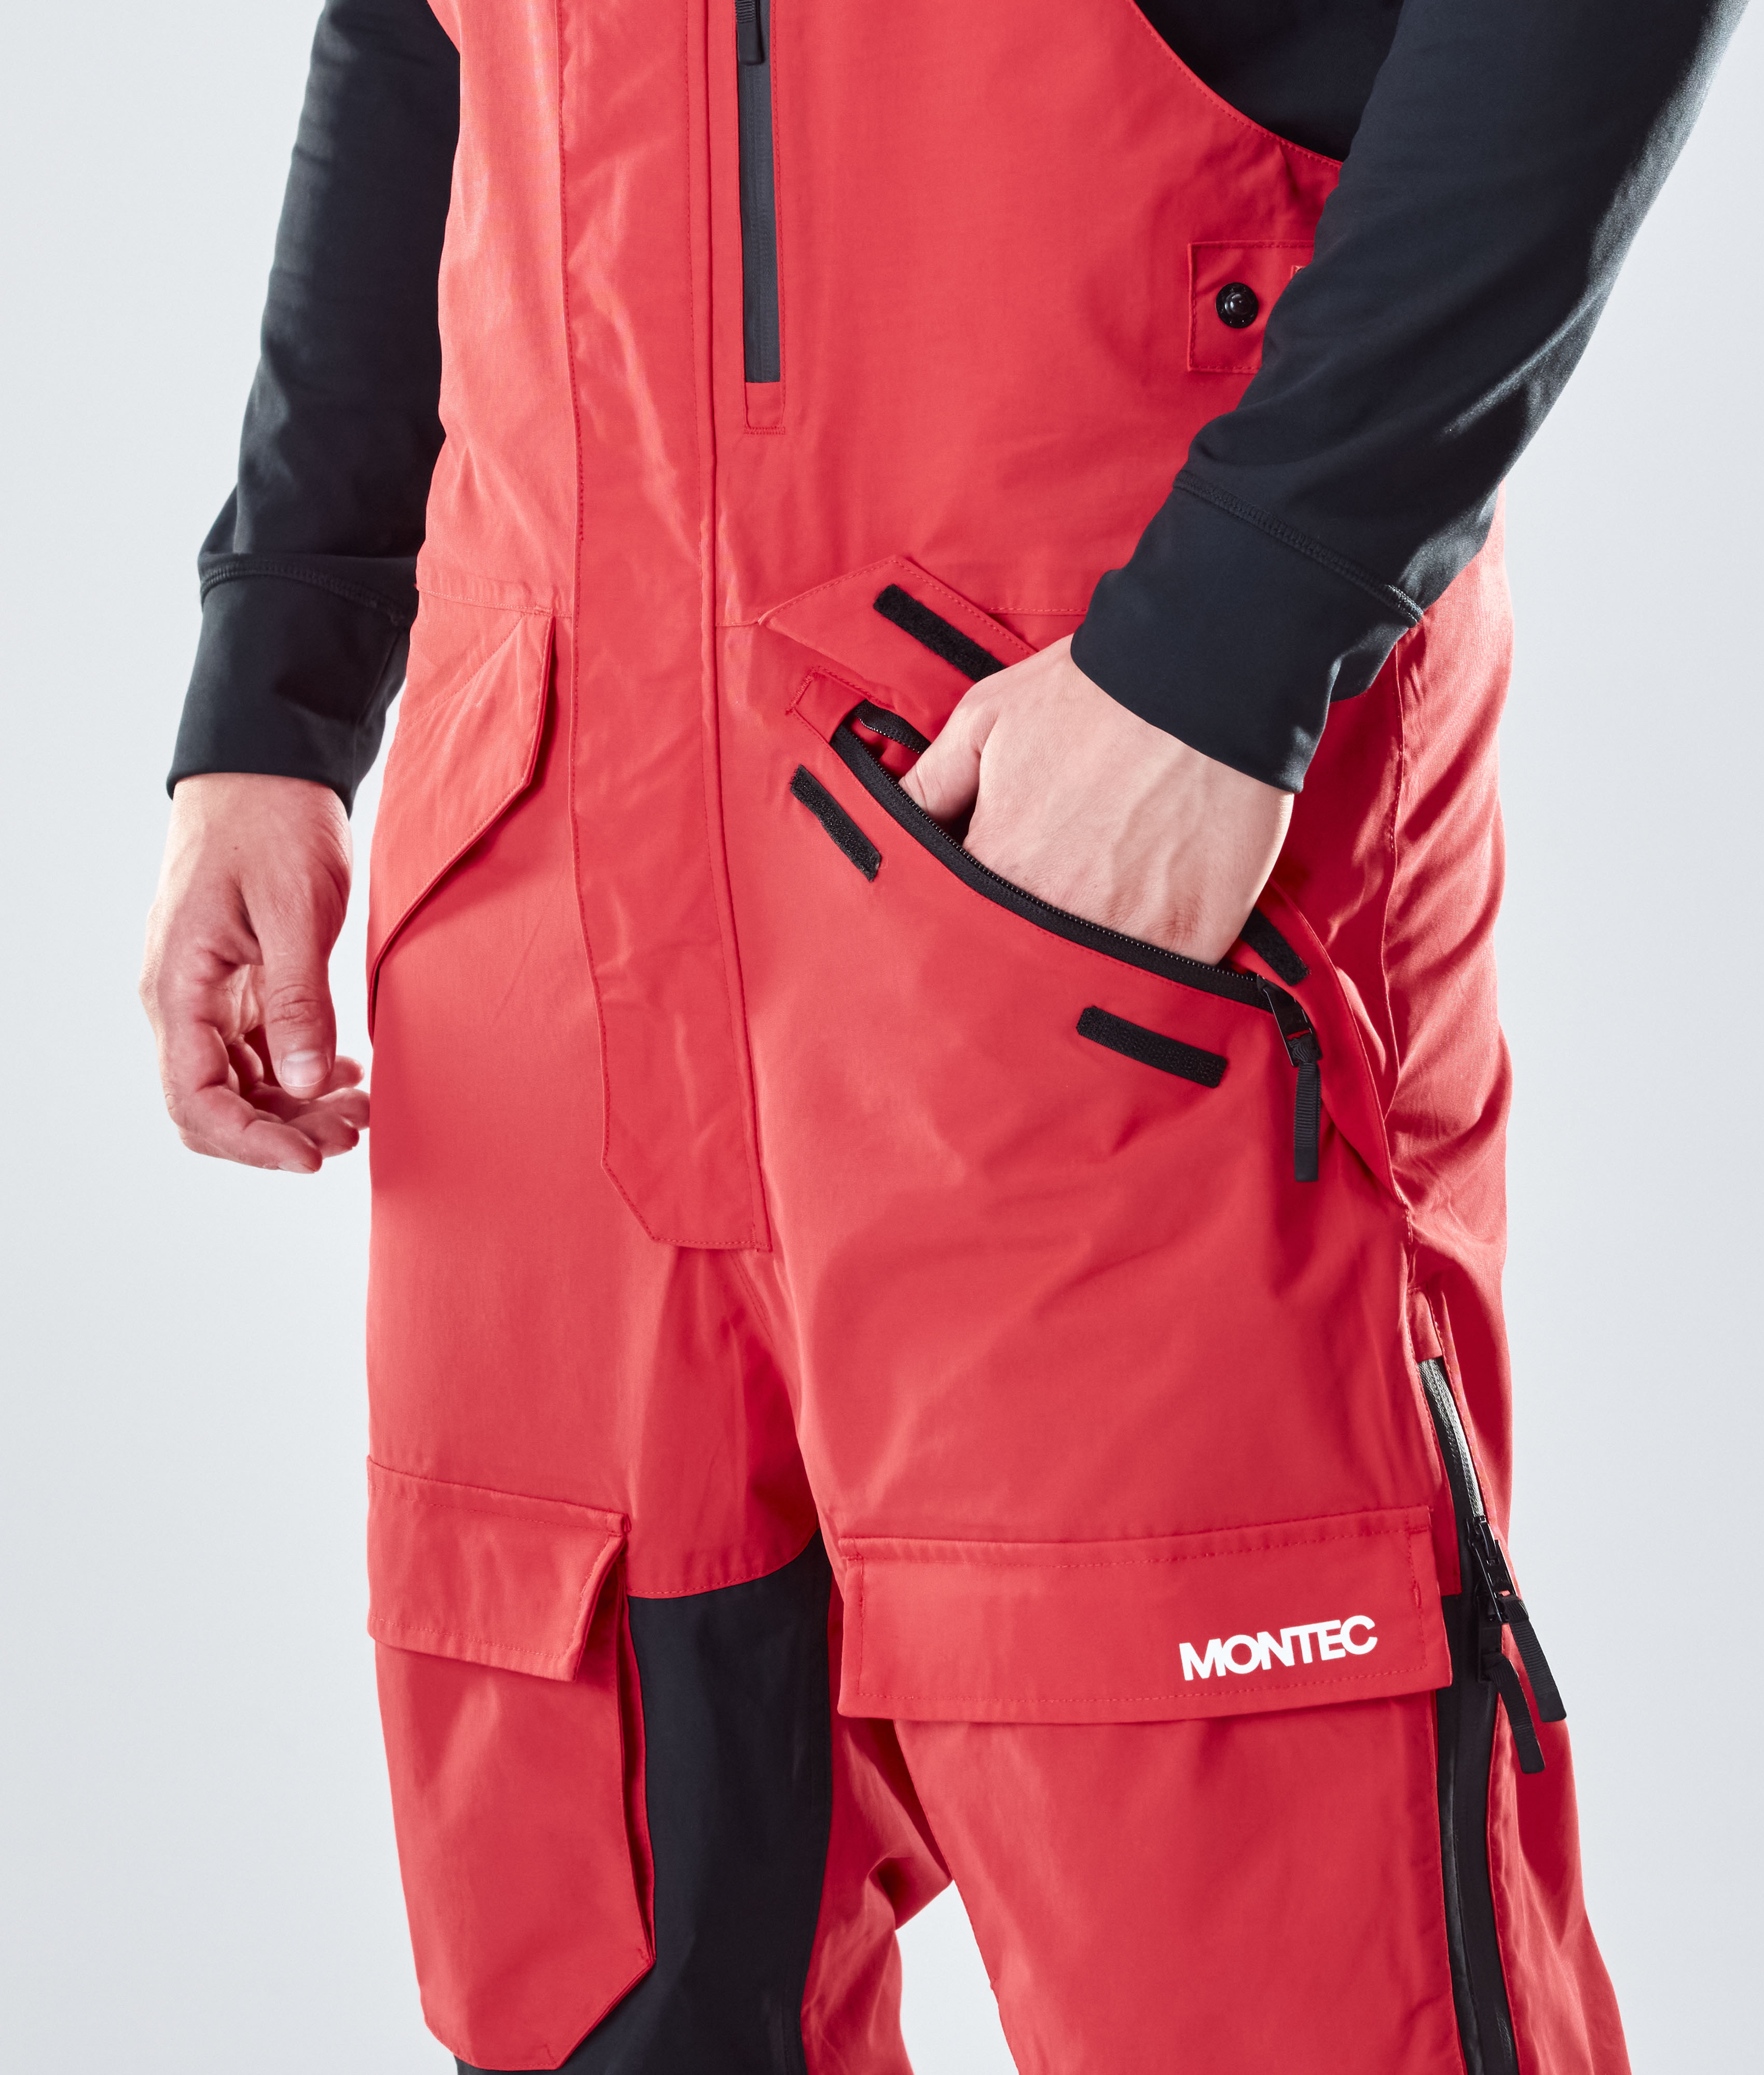 Fawk 2020 Ski Pants Red/Black | Montecwear.com